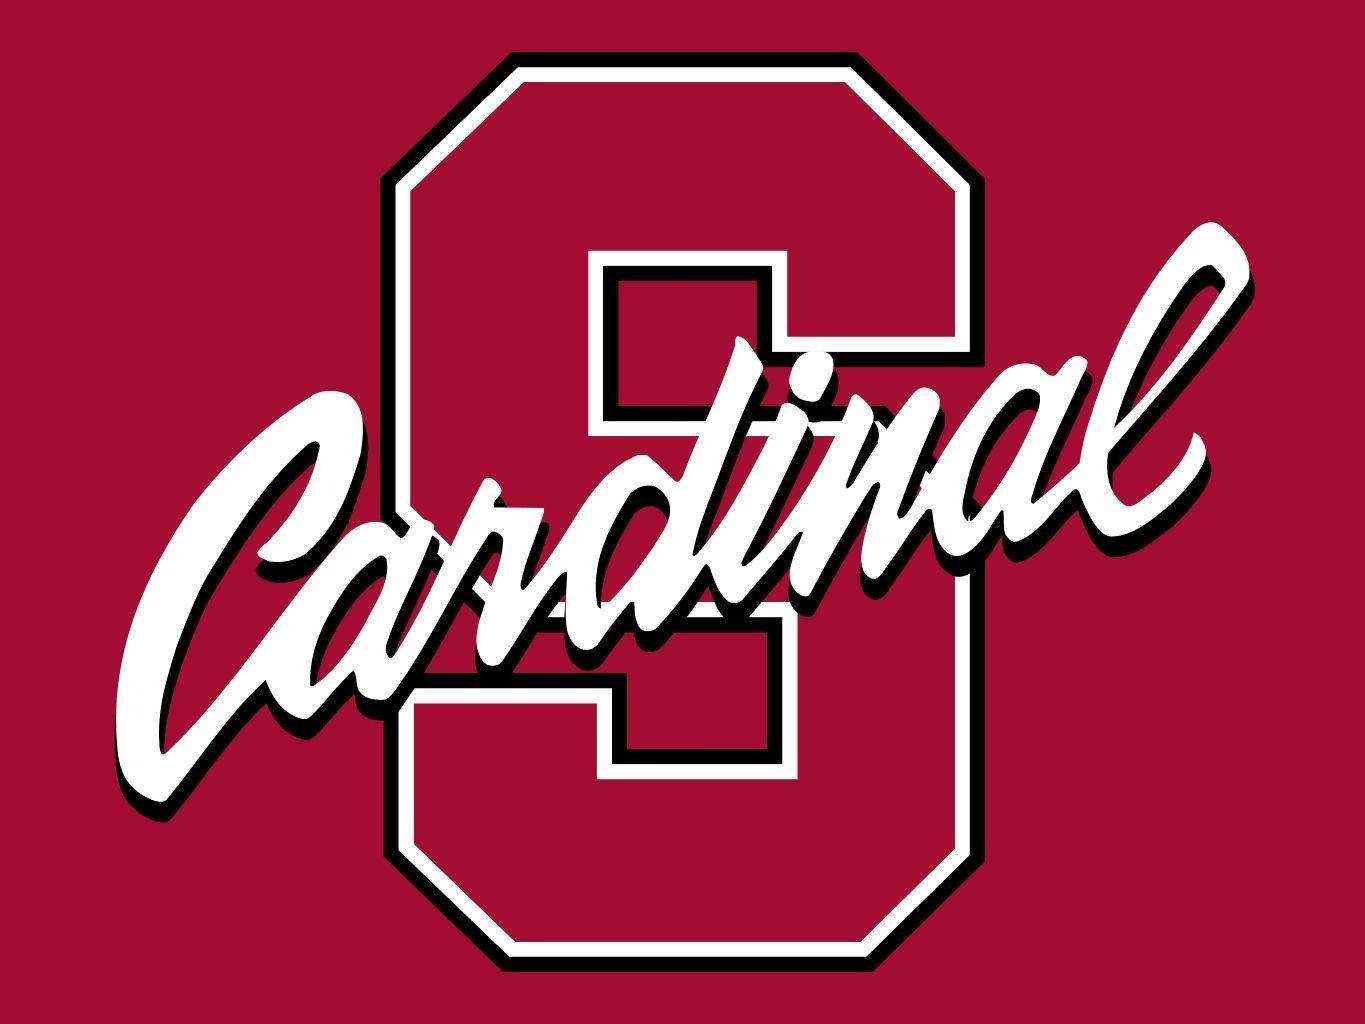 Stanford University Cardinal Football-tapet: Vis din støtte til Cardinal Football-holdet på Stanford University med dette tapet. Wallpaper